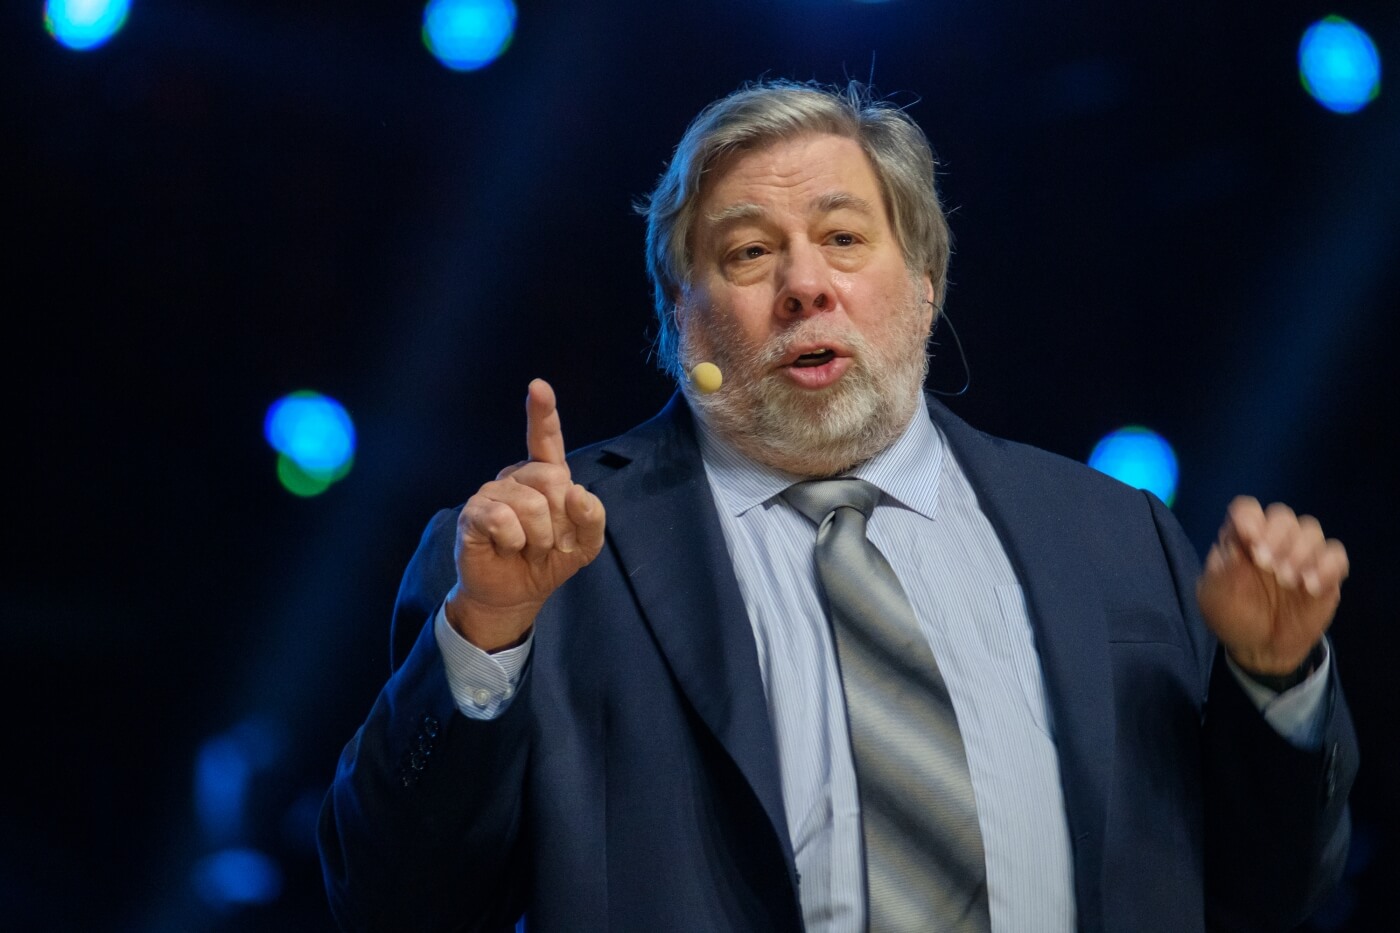 Steve Wozniak slams dishonest Elon Musk and Tesla, says they robbed him and his family